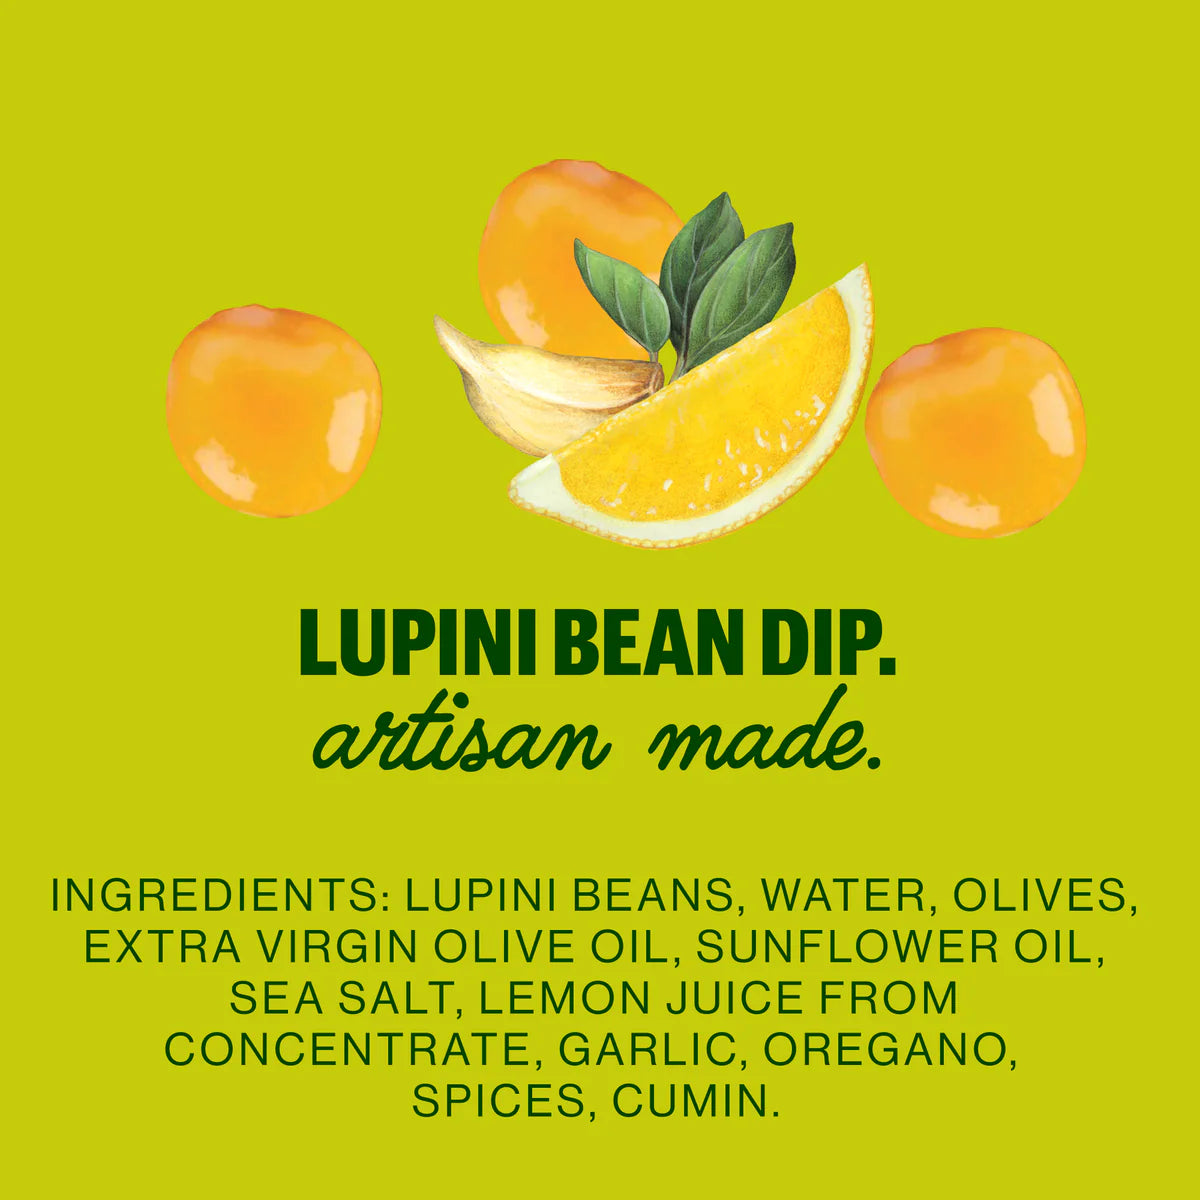 Brami - Mediterranean Olive Lupini Bean Hummus (10 oz)